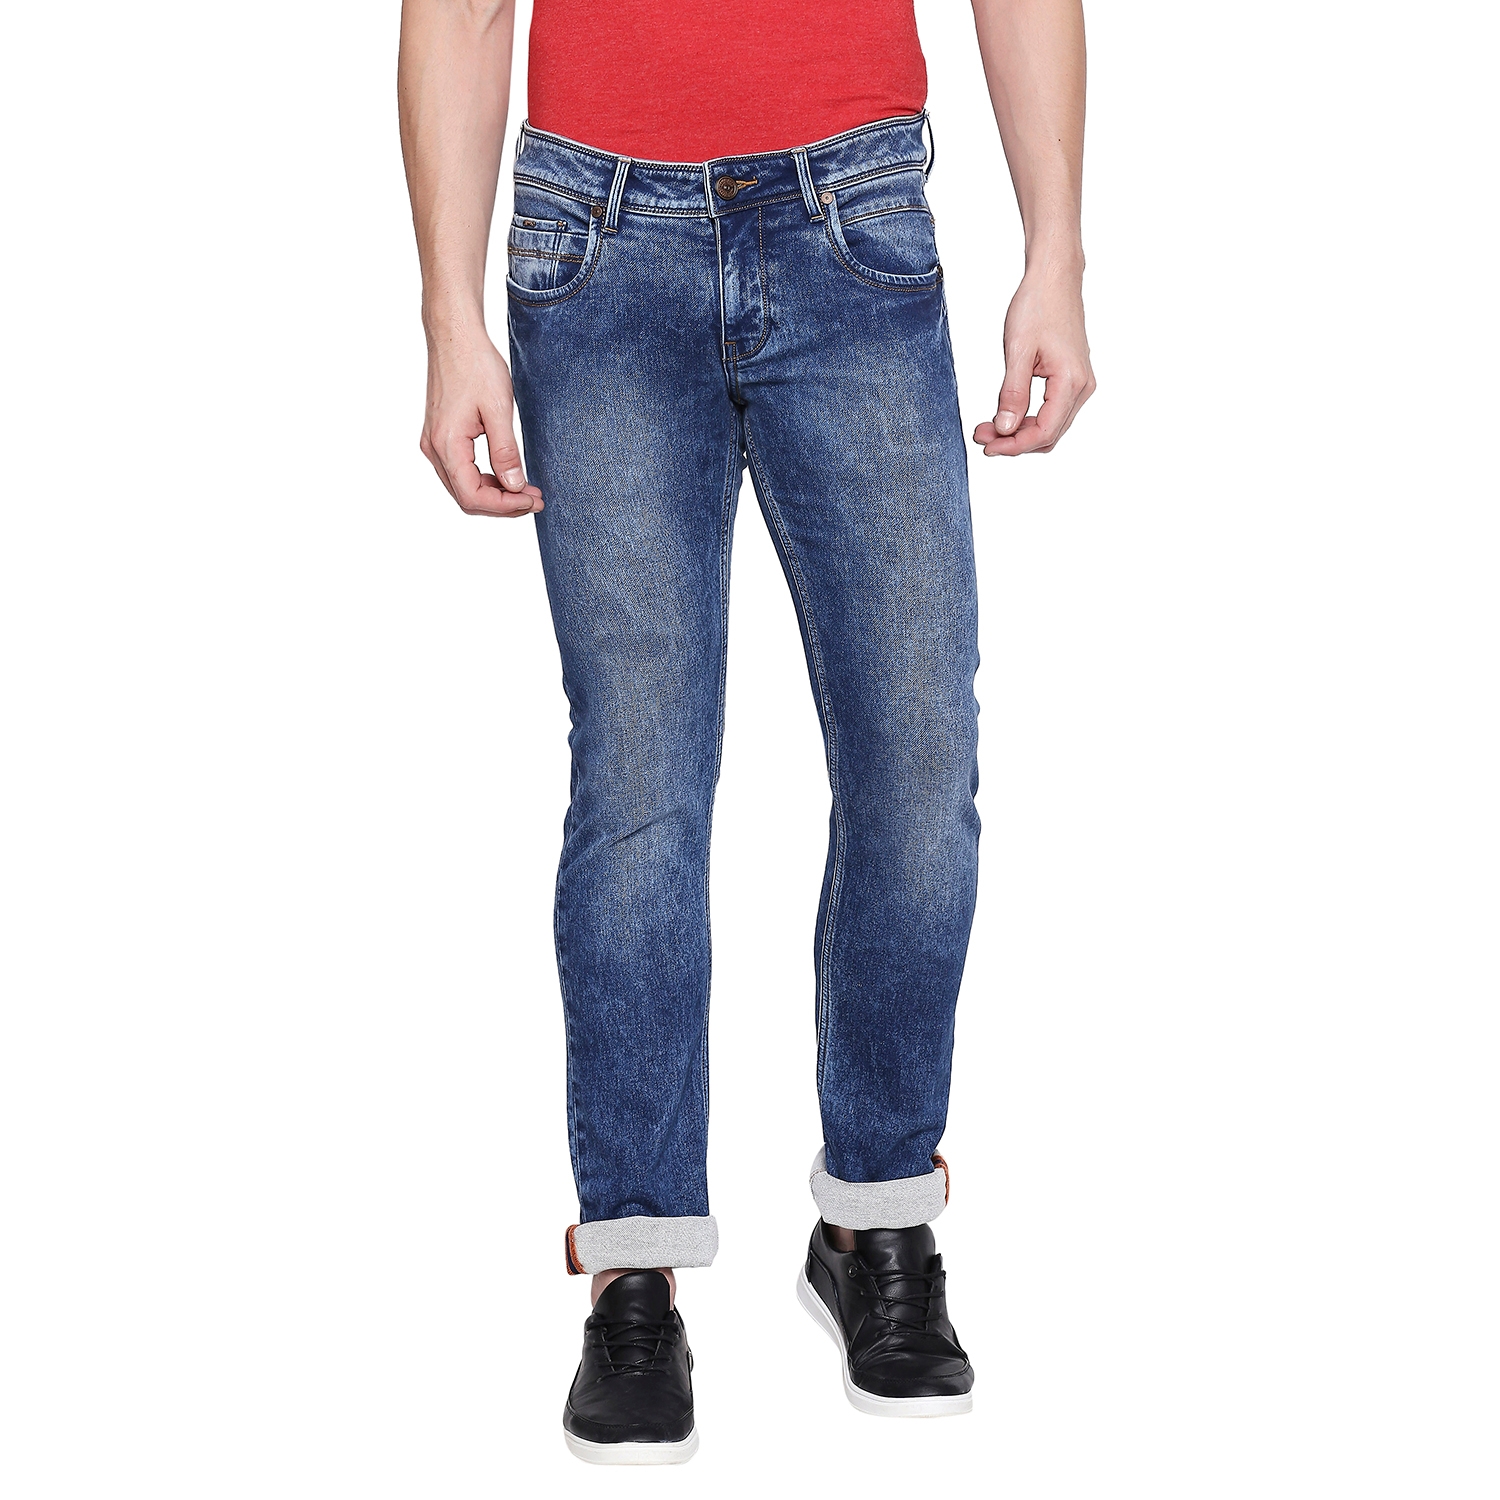 Basics | Basics Torque Fit Blue Horizon Stretch Jeans